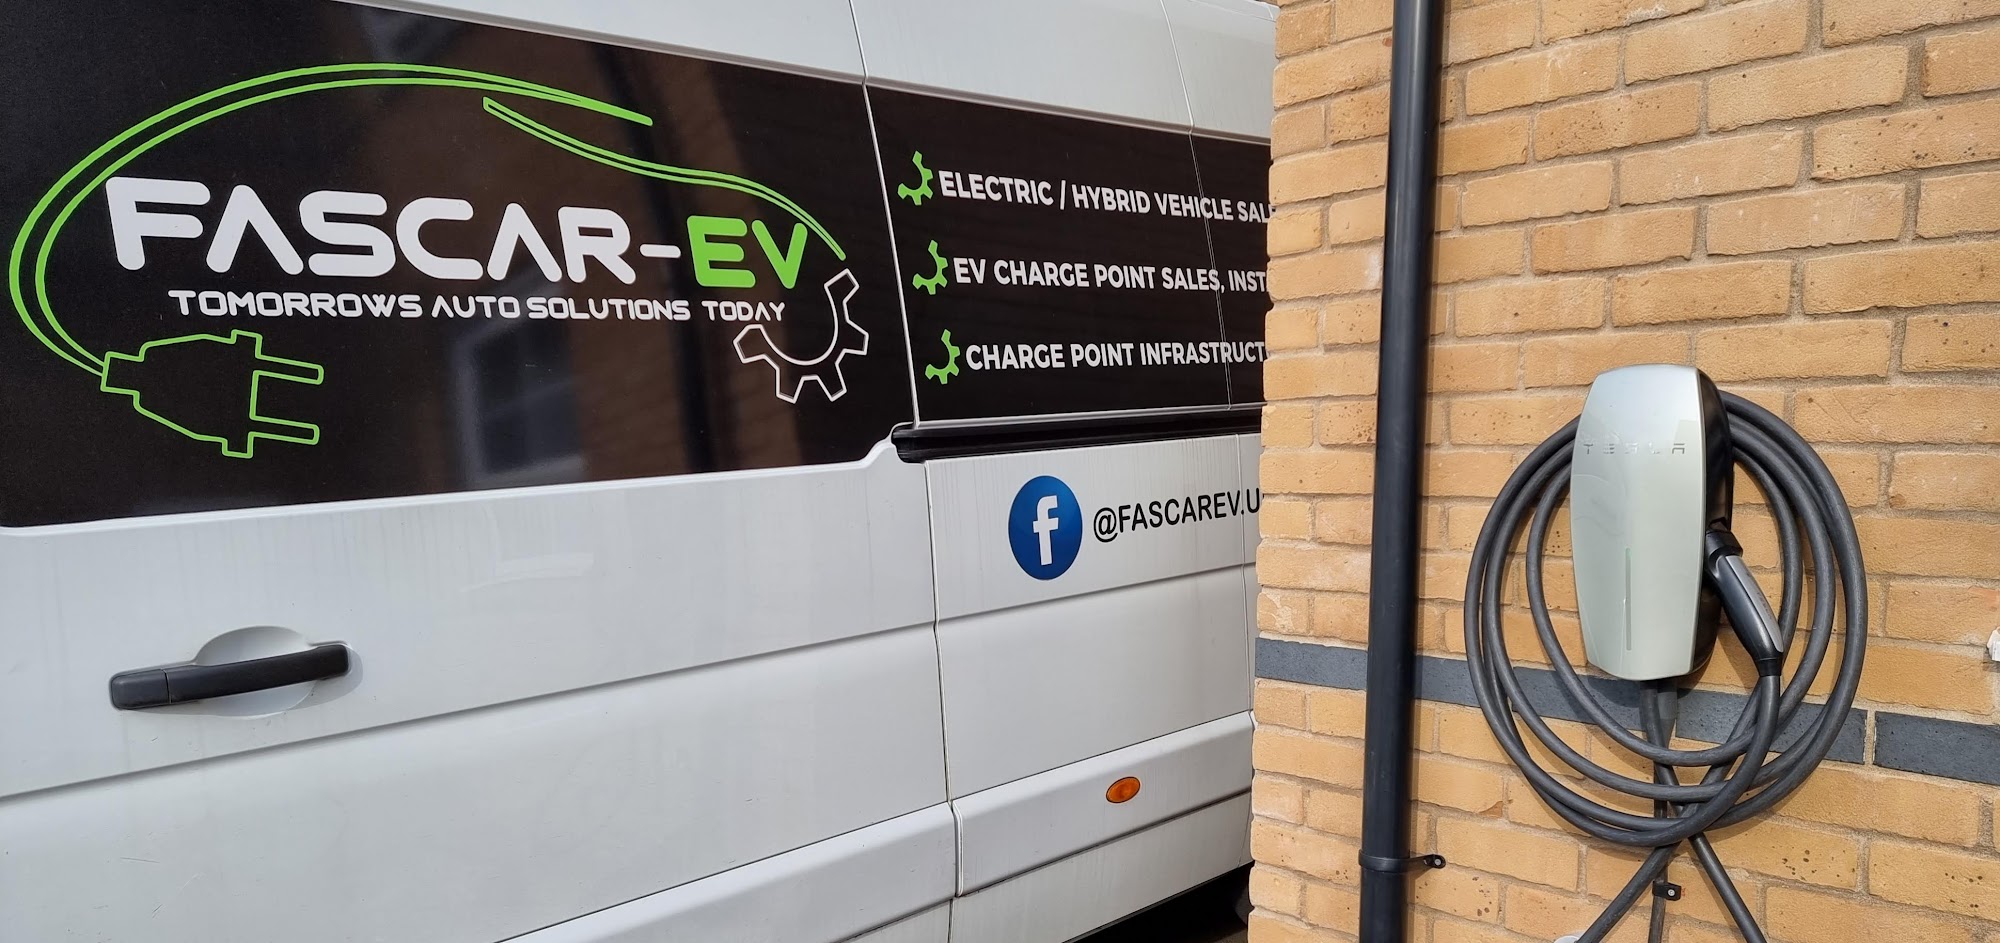 FASCAR EV , TESLA Independent Service / Electric Vehicle Specialists